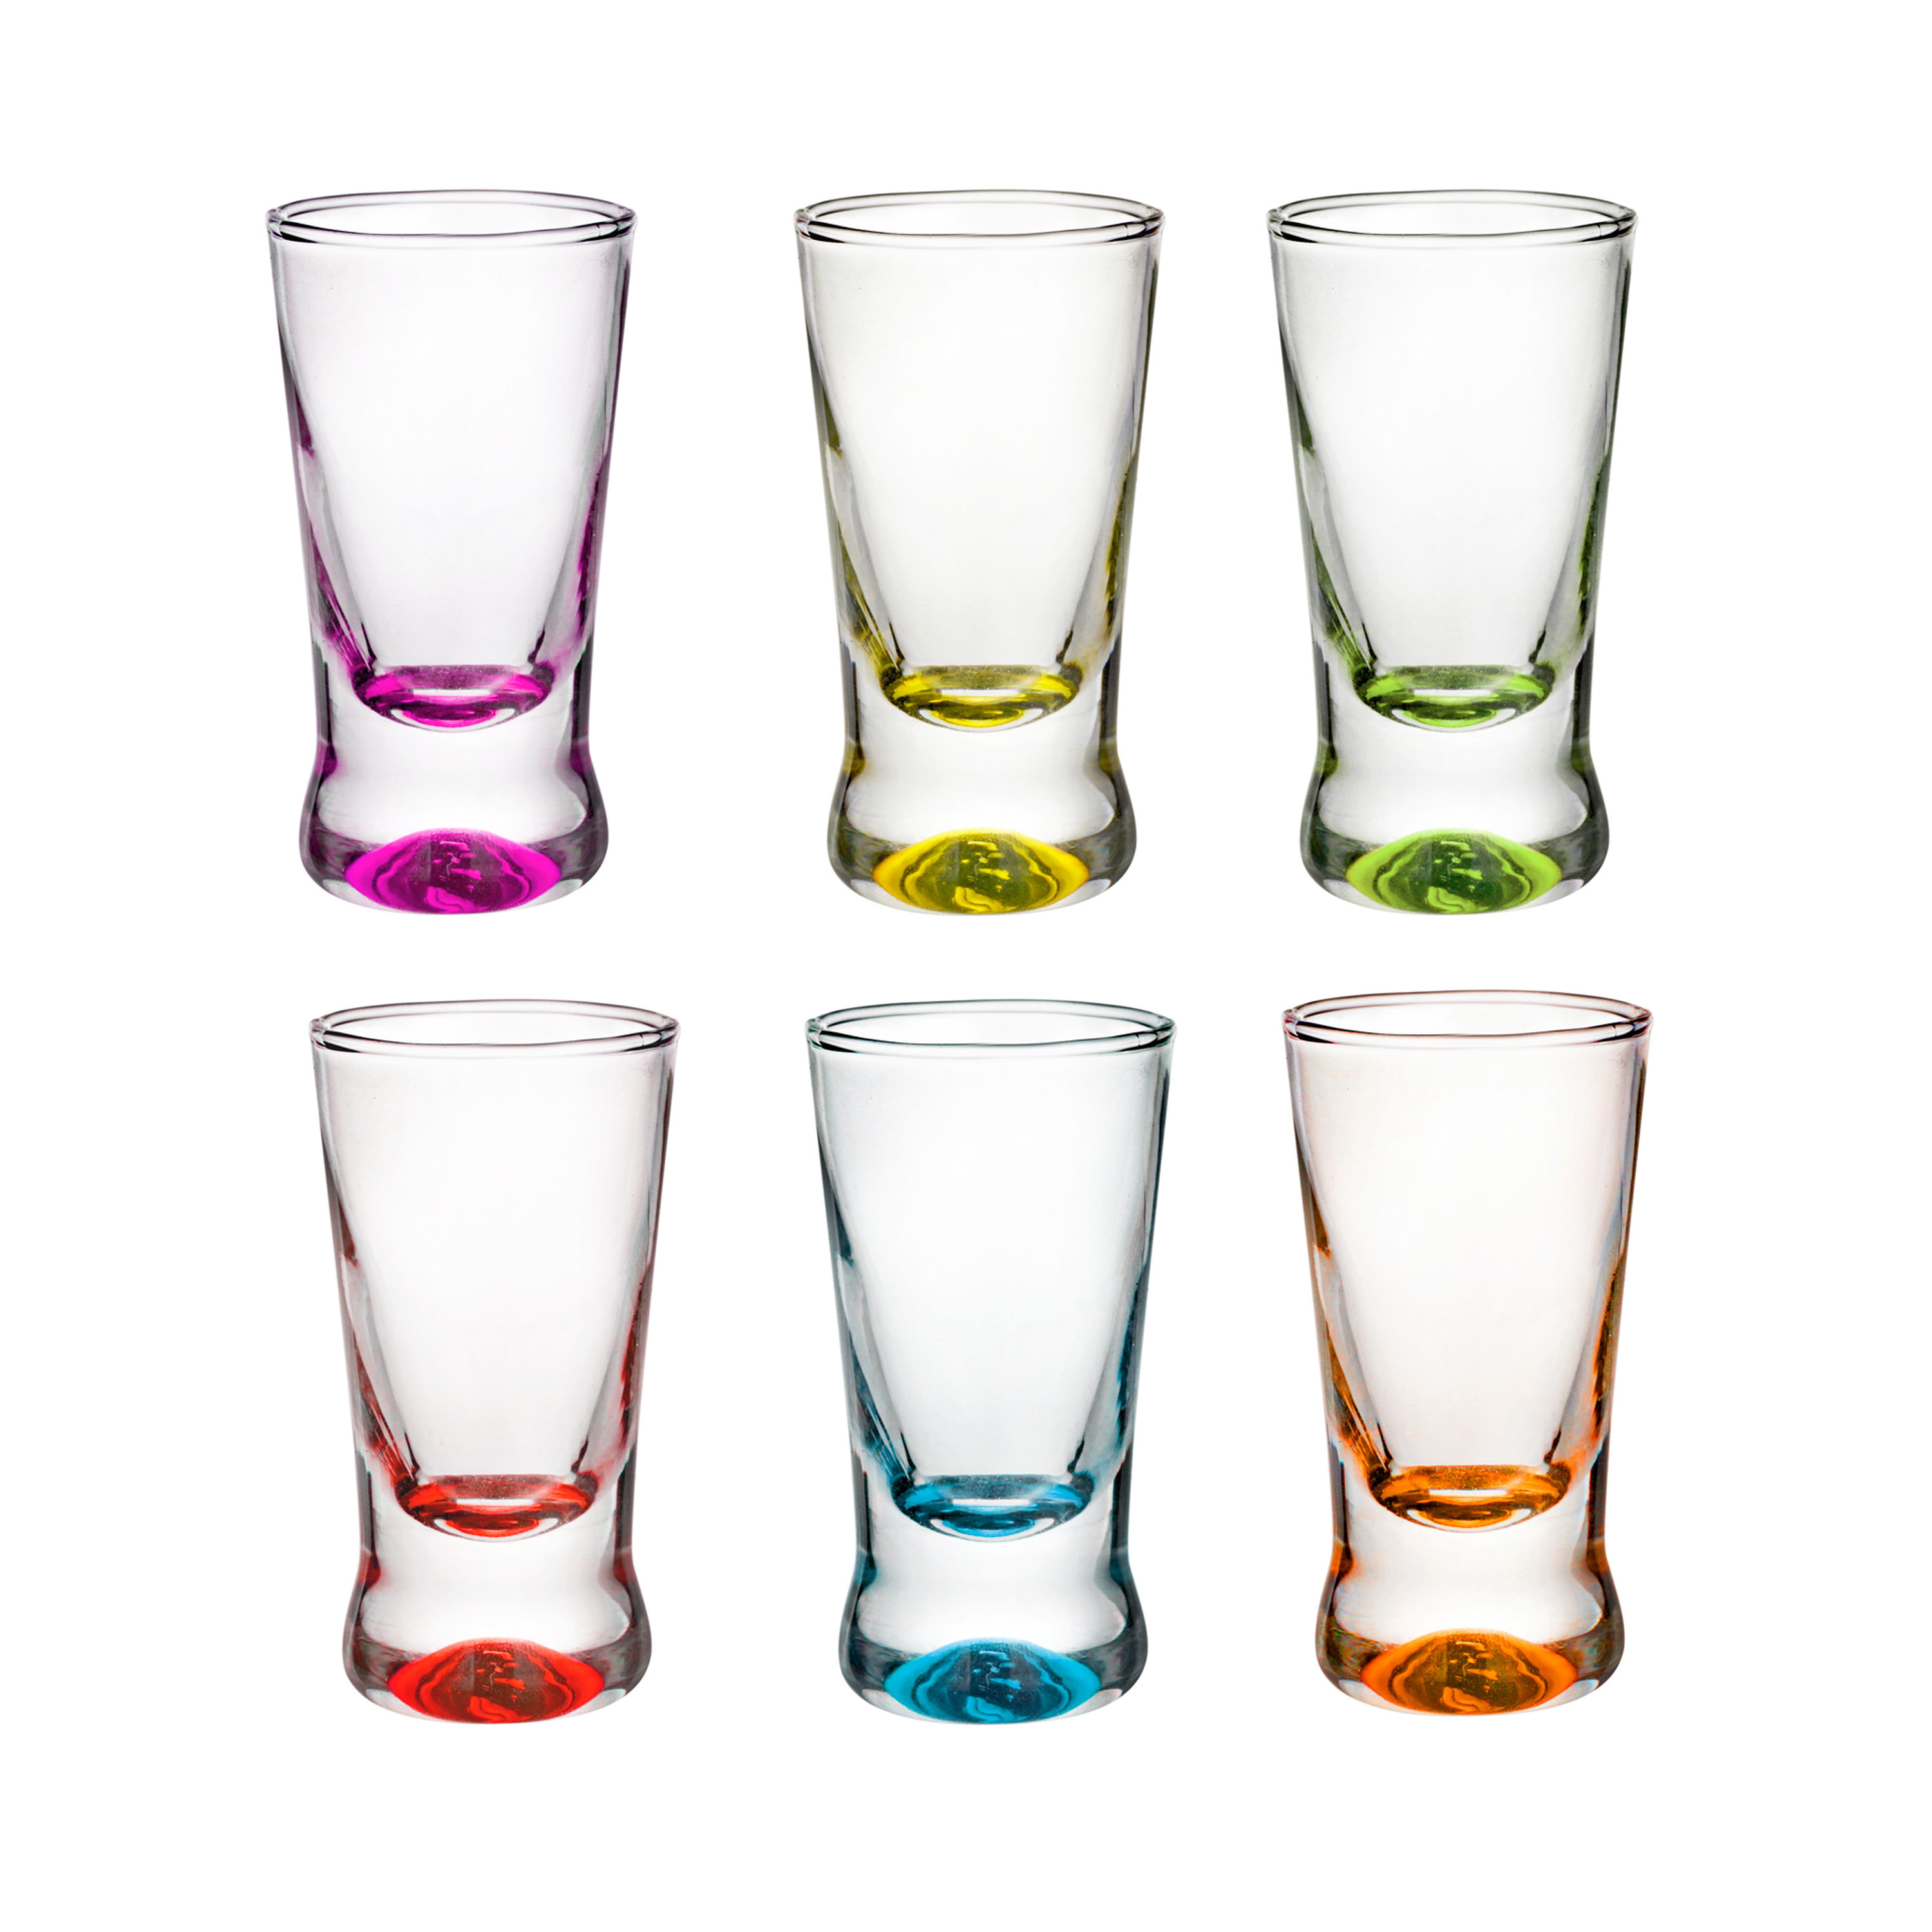 Glasmark Shotglaasjes-borrelglazen glas gekleurde onderzijde 24x stuks 25 ml